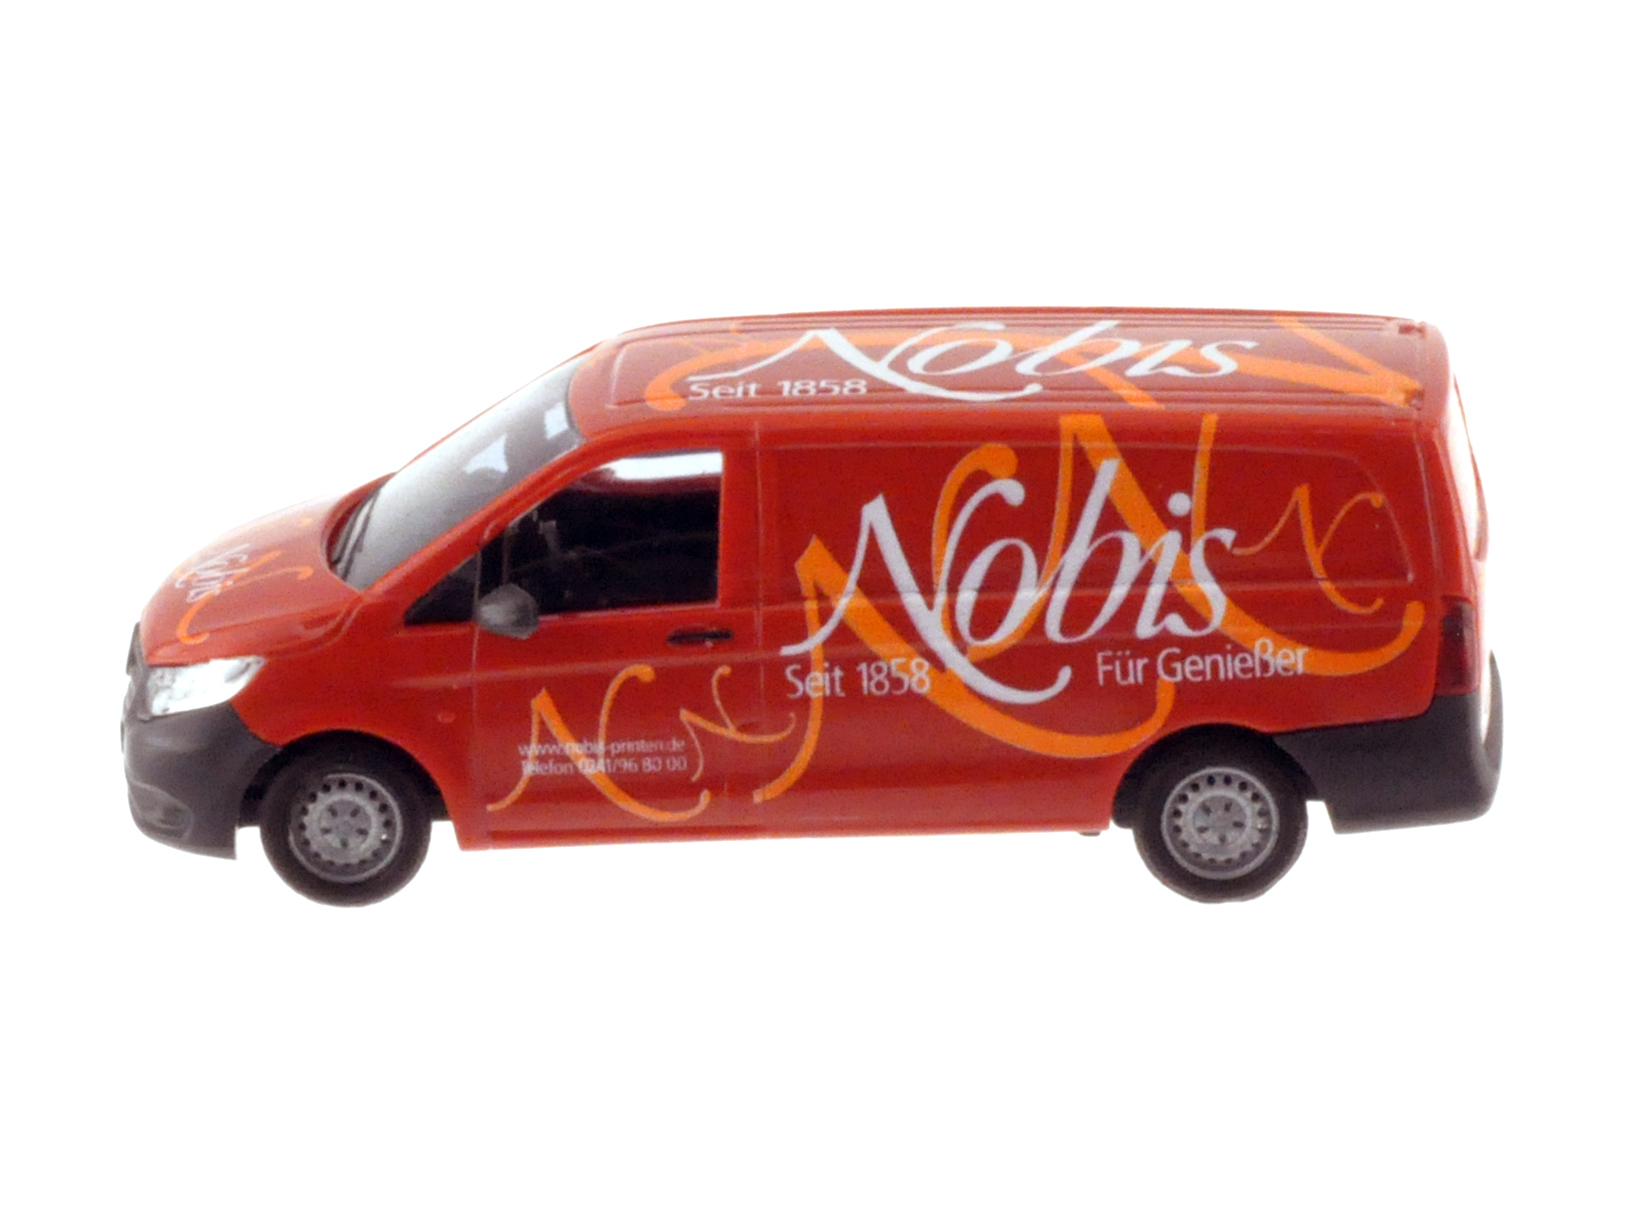 Mercedes Vito Nobis Printen aktuelles Fahrzeug des Aachener Printenherstellers Nobis